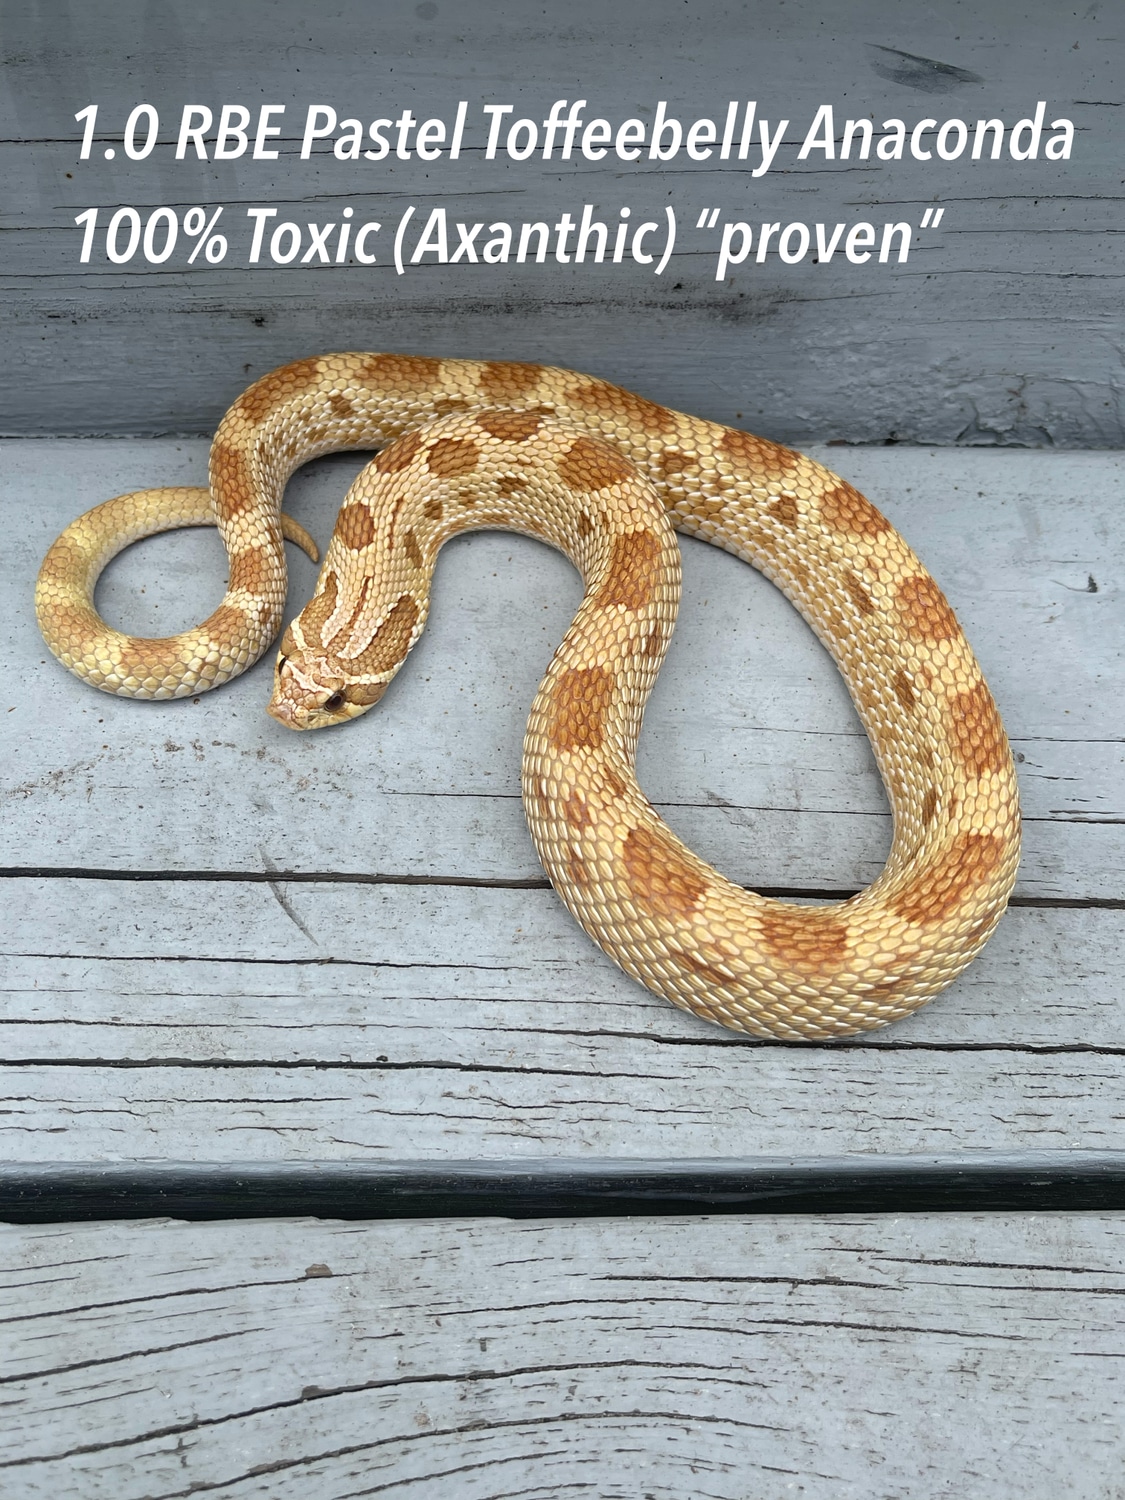 RTB - RBE Pastel Toffeebelly Anaconda 100% Axanthic Western Hognose by Prestige worldwide hognose